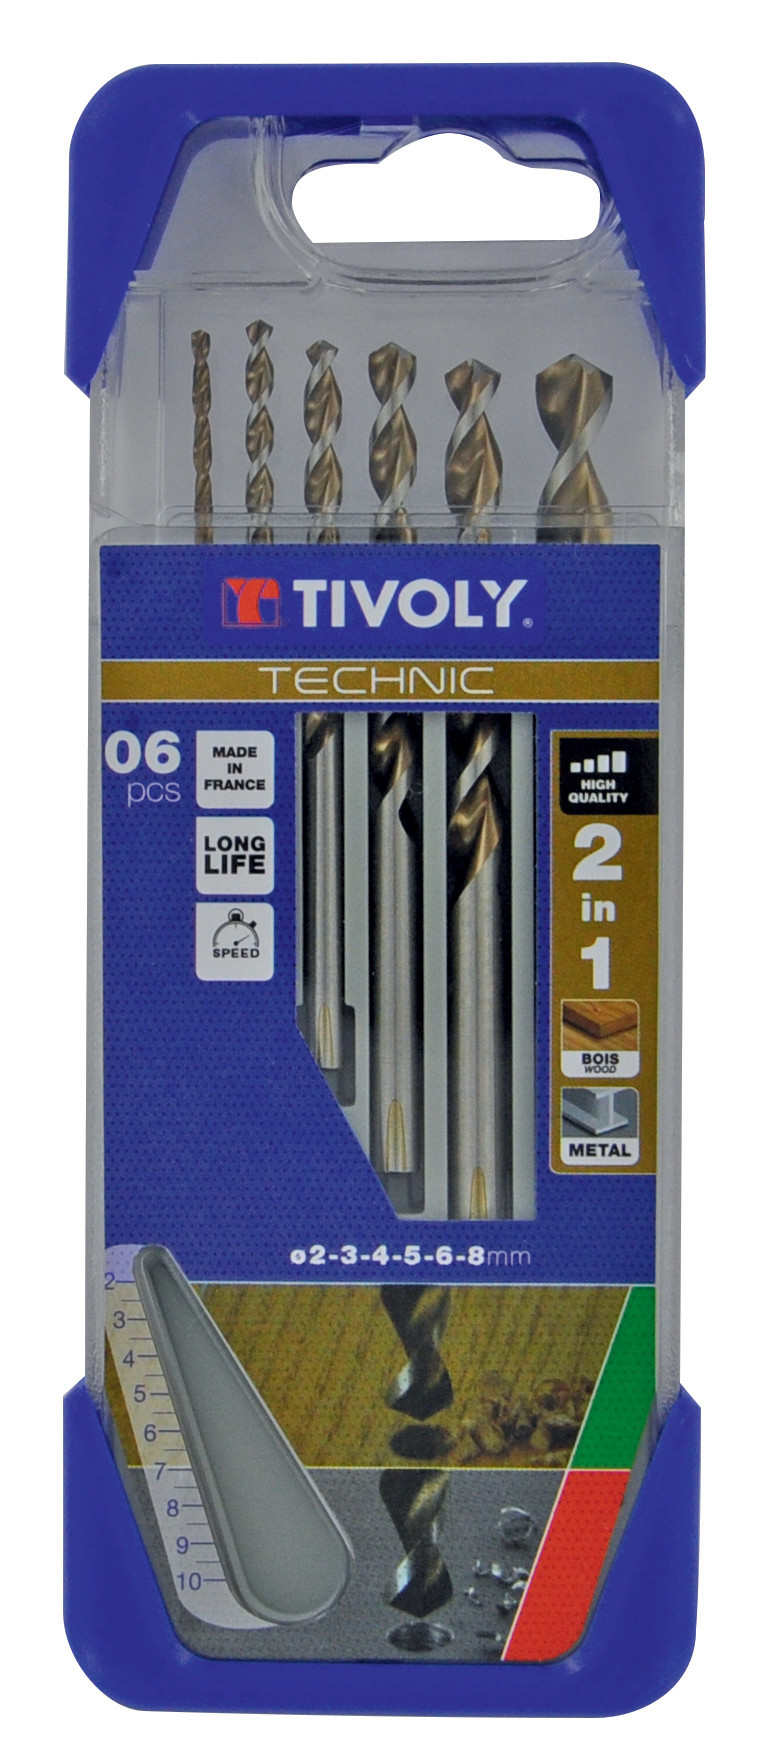 Coffret de 6 foret technic multimatériau TIVOLY 10.80447, Diam.4-5-6-8-10 mm